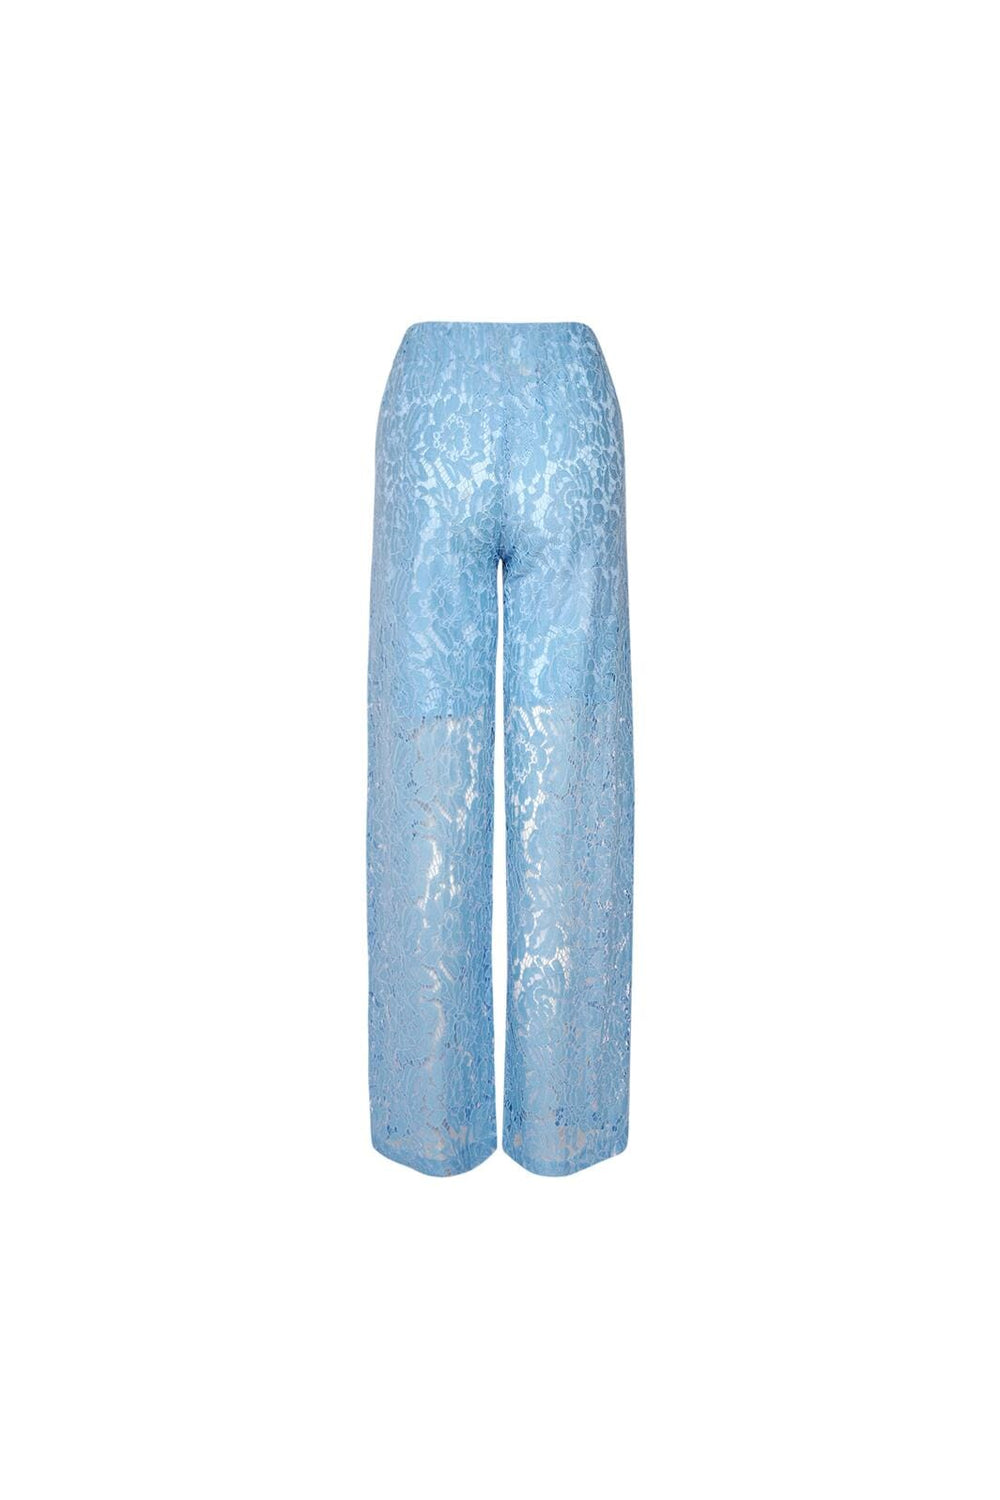 Noella - Briston Pants Ss - 016 Light Blue